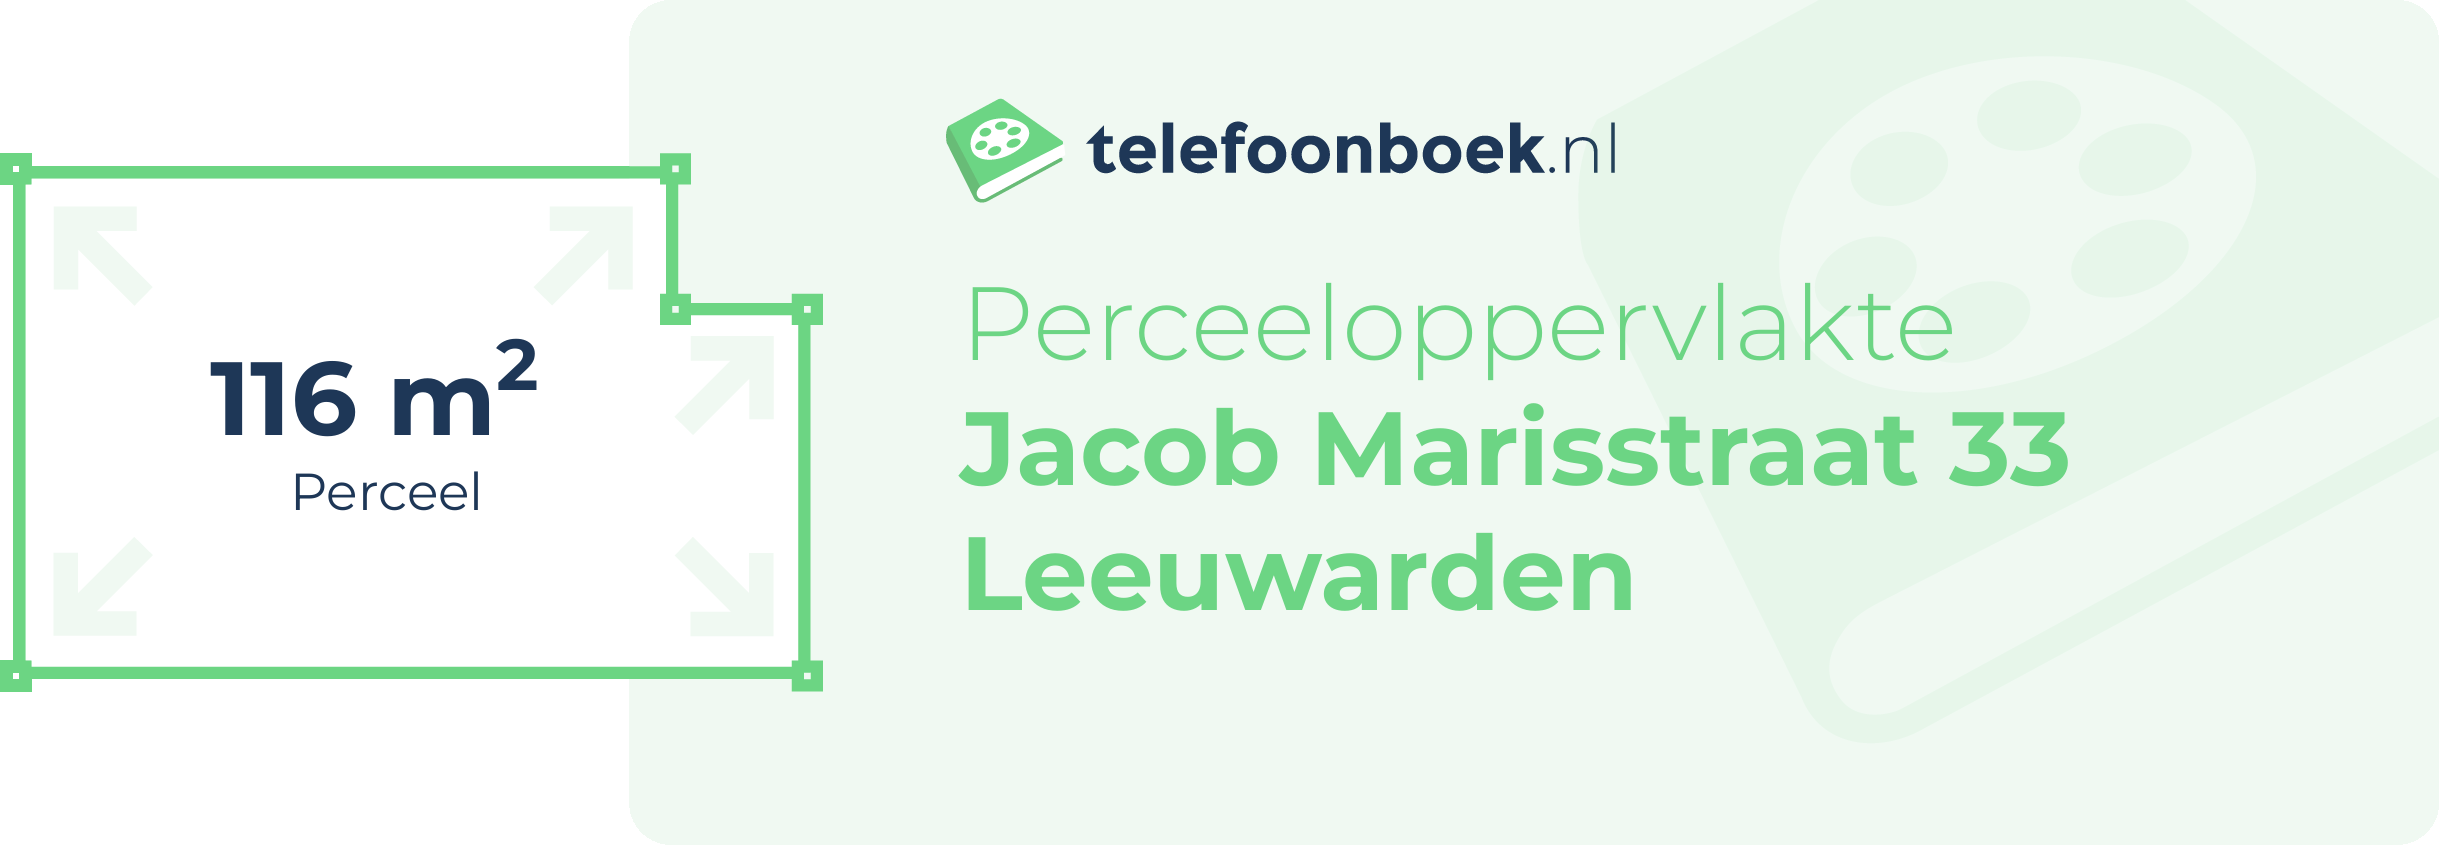 Perceeloppervlakte Jacob Marisstraat 33 Leeuwarden